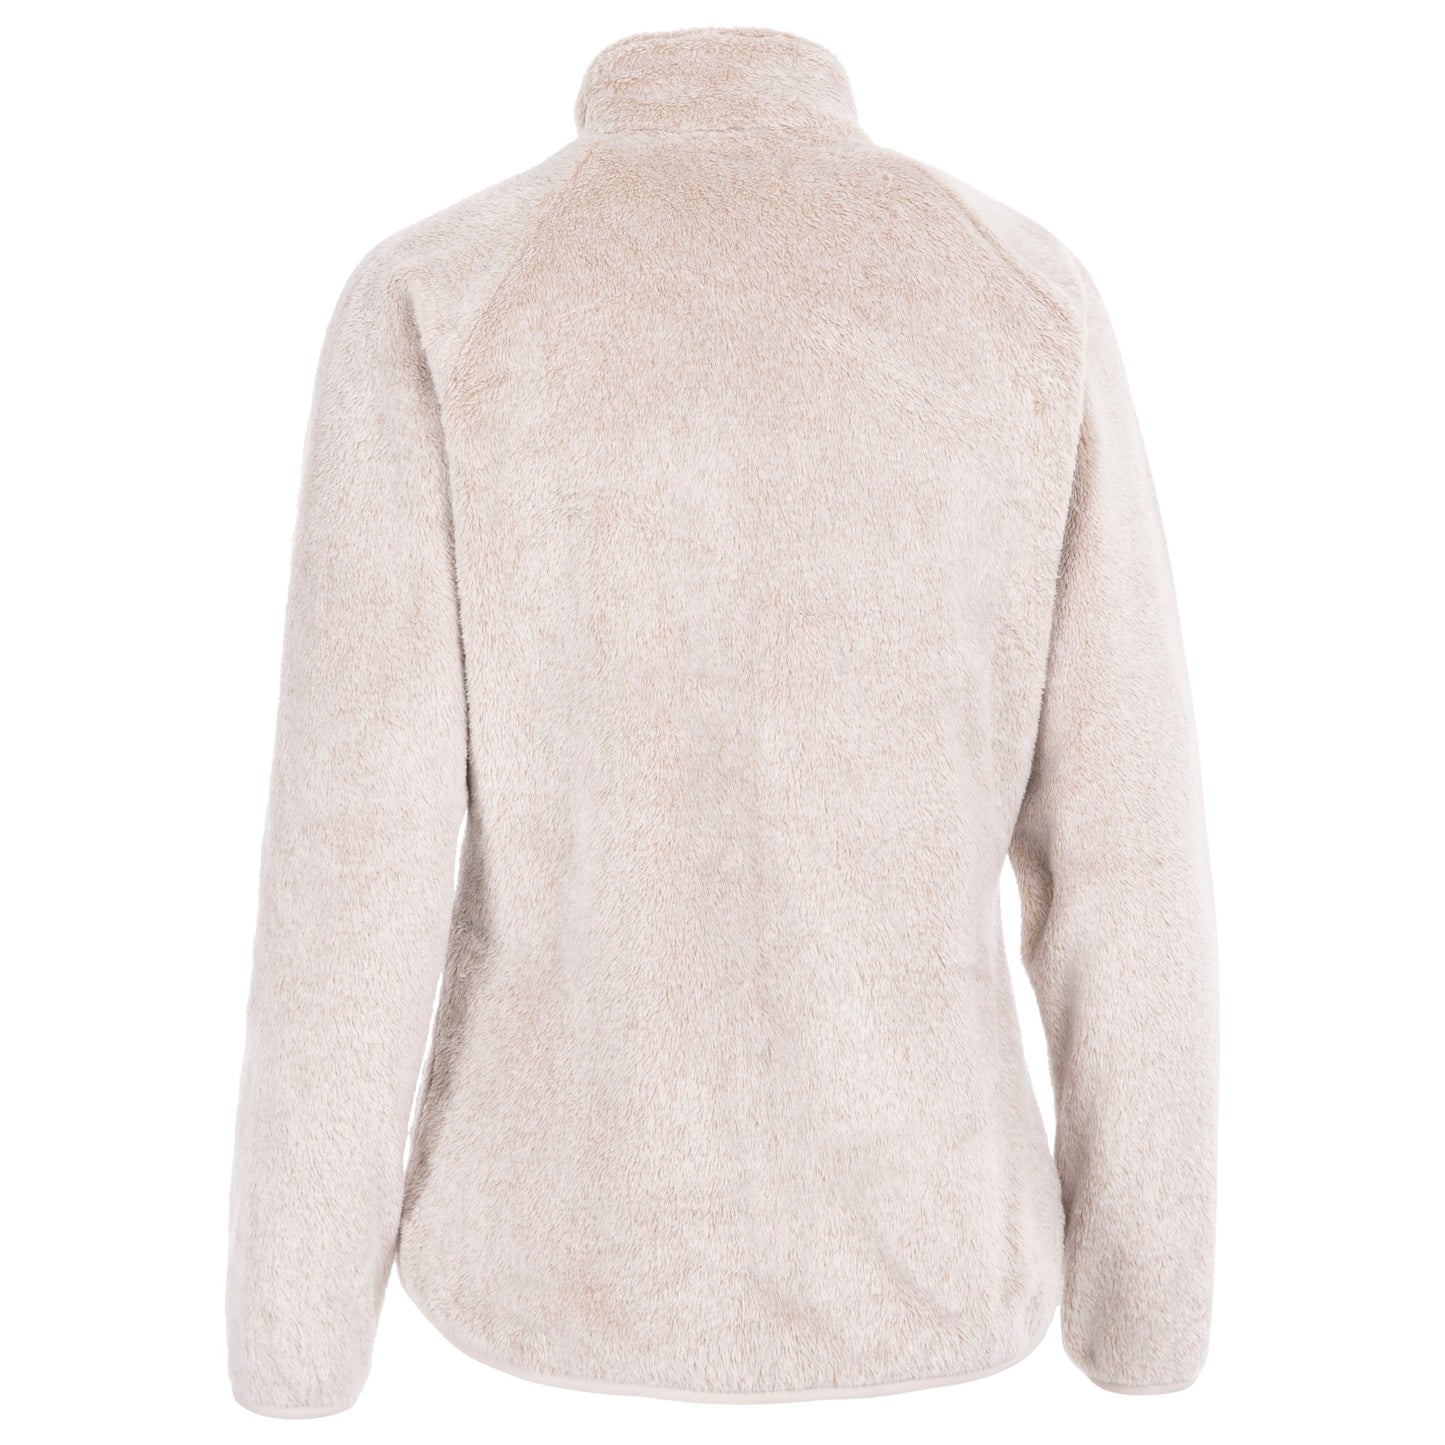 Telltale Women's Soft and Furry Fleece Jacket in Soft Stone